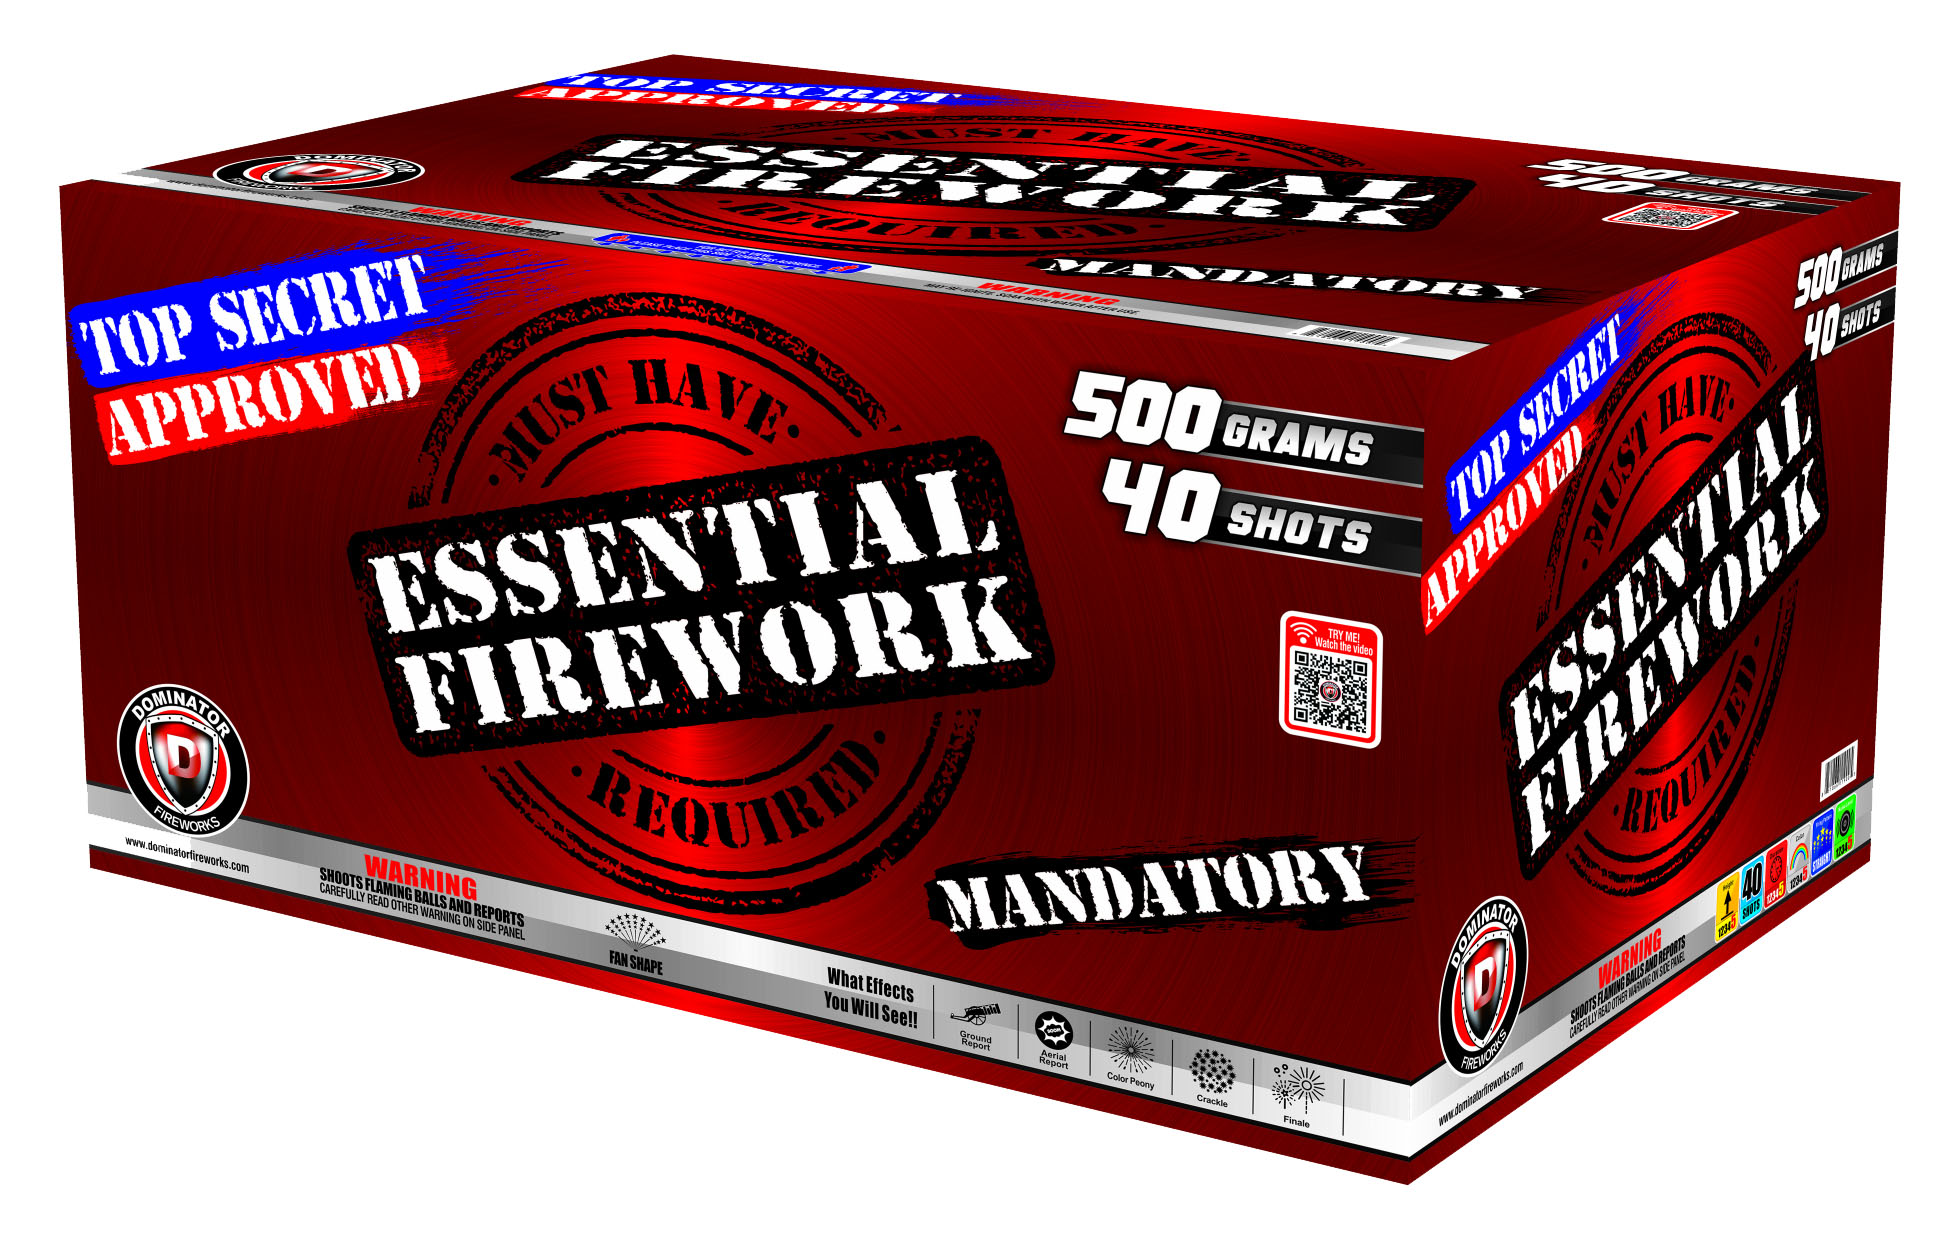 Essential Firework